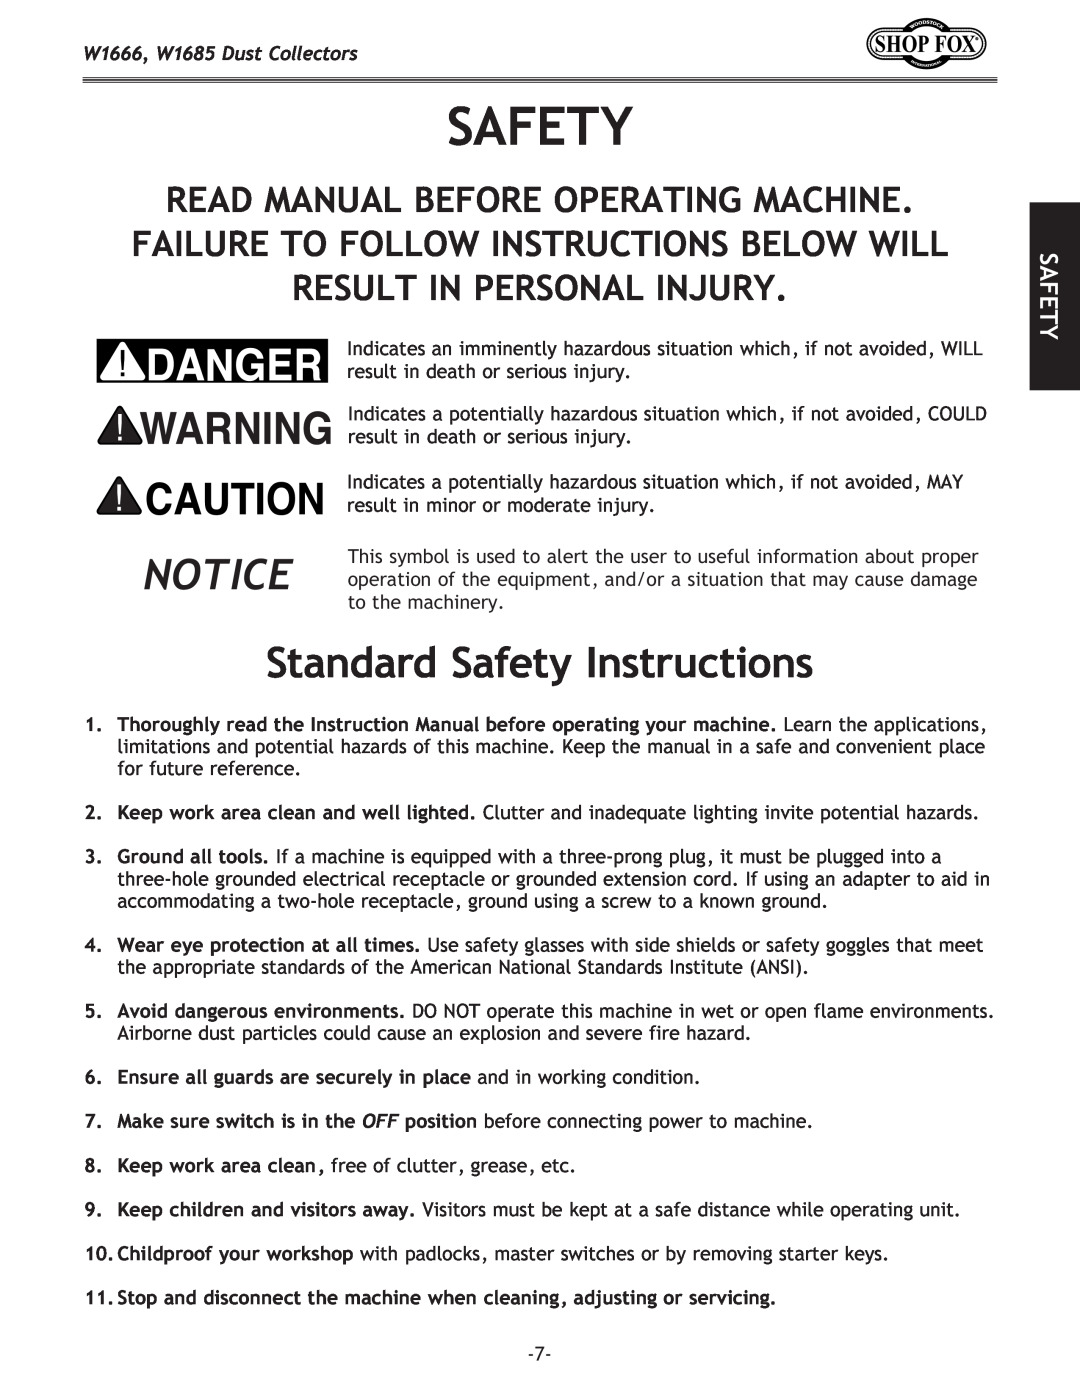 Woodstock DUST COLLECTORS instruction manual Standard Safety Instructions, W1666, W1685 Dust Collectors 